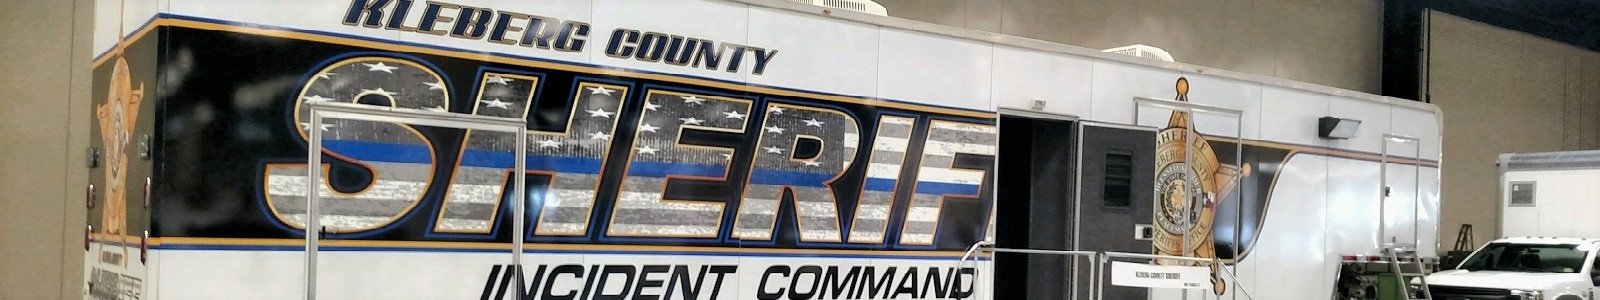 Kleberg County Sheriff's Incident Command trailer.